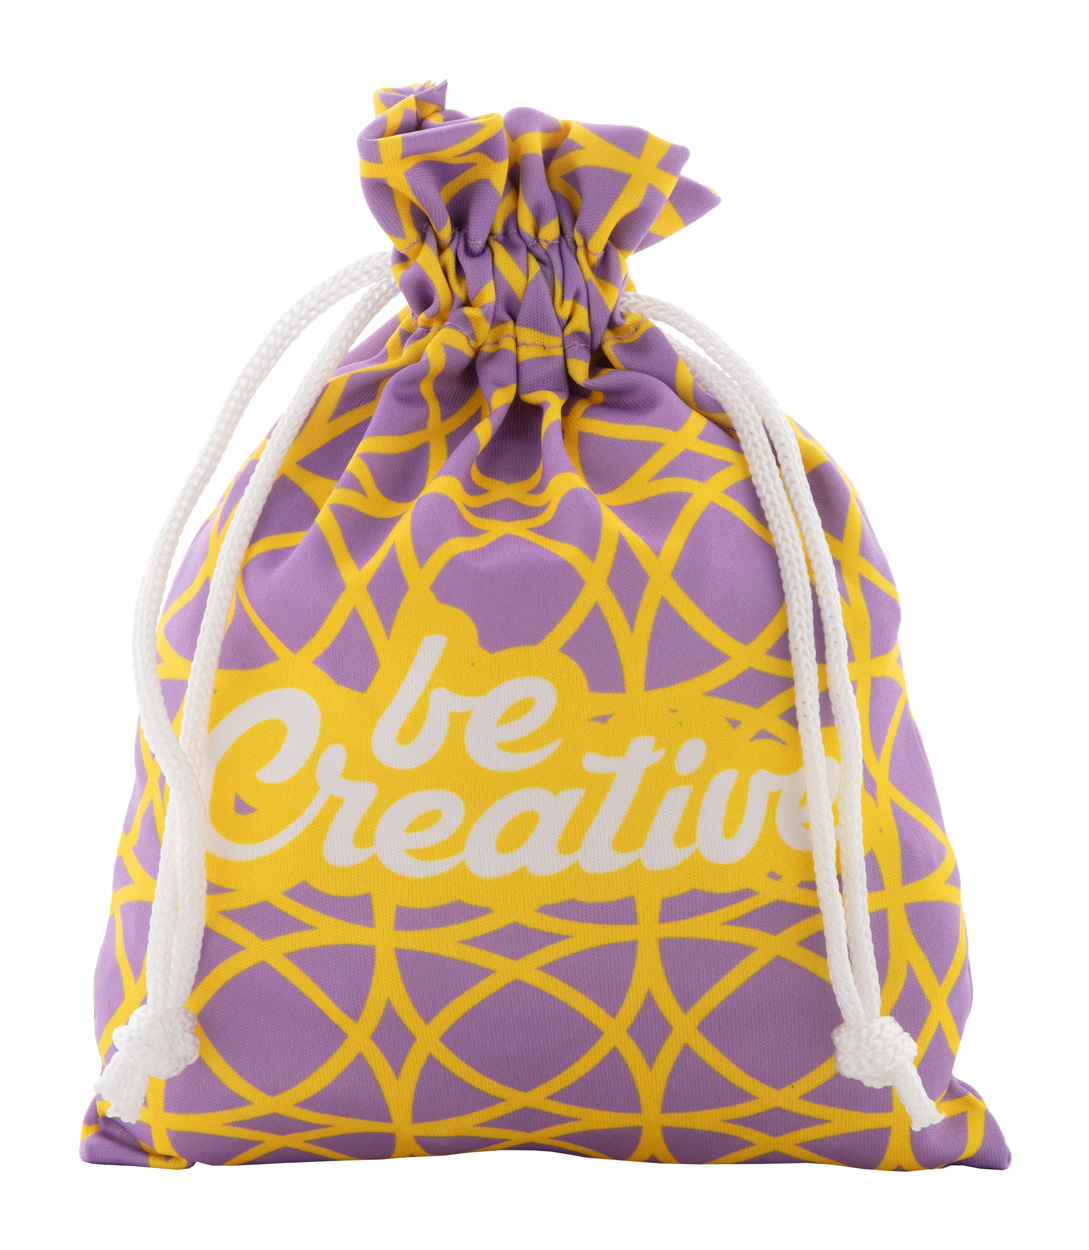 SuboGift M custom gift bag, medium - white